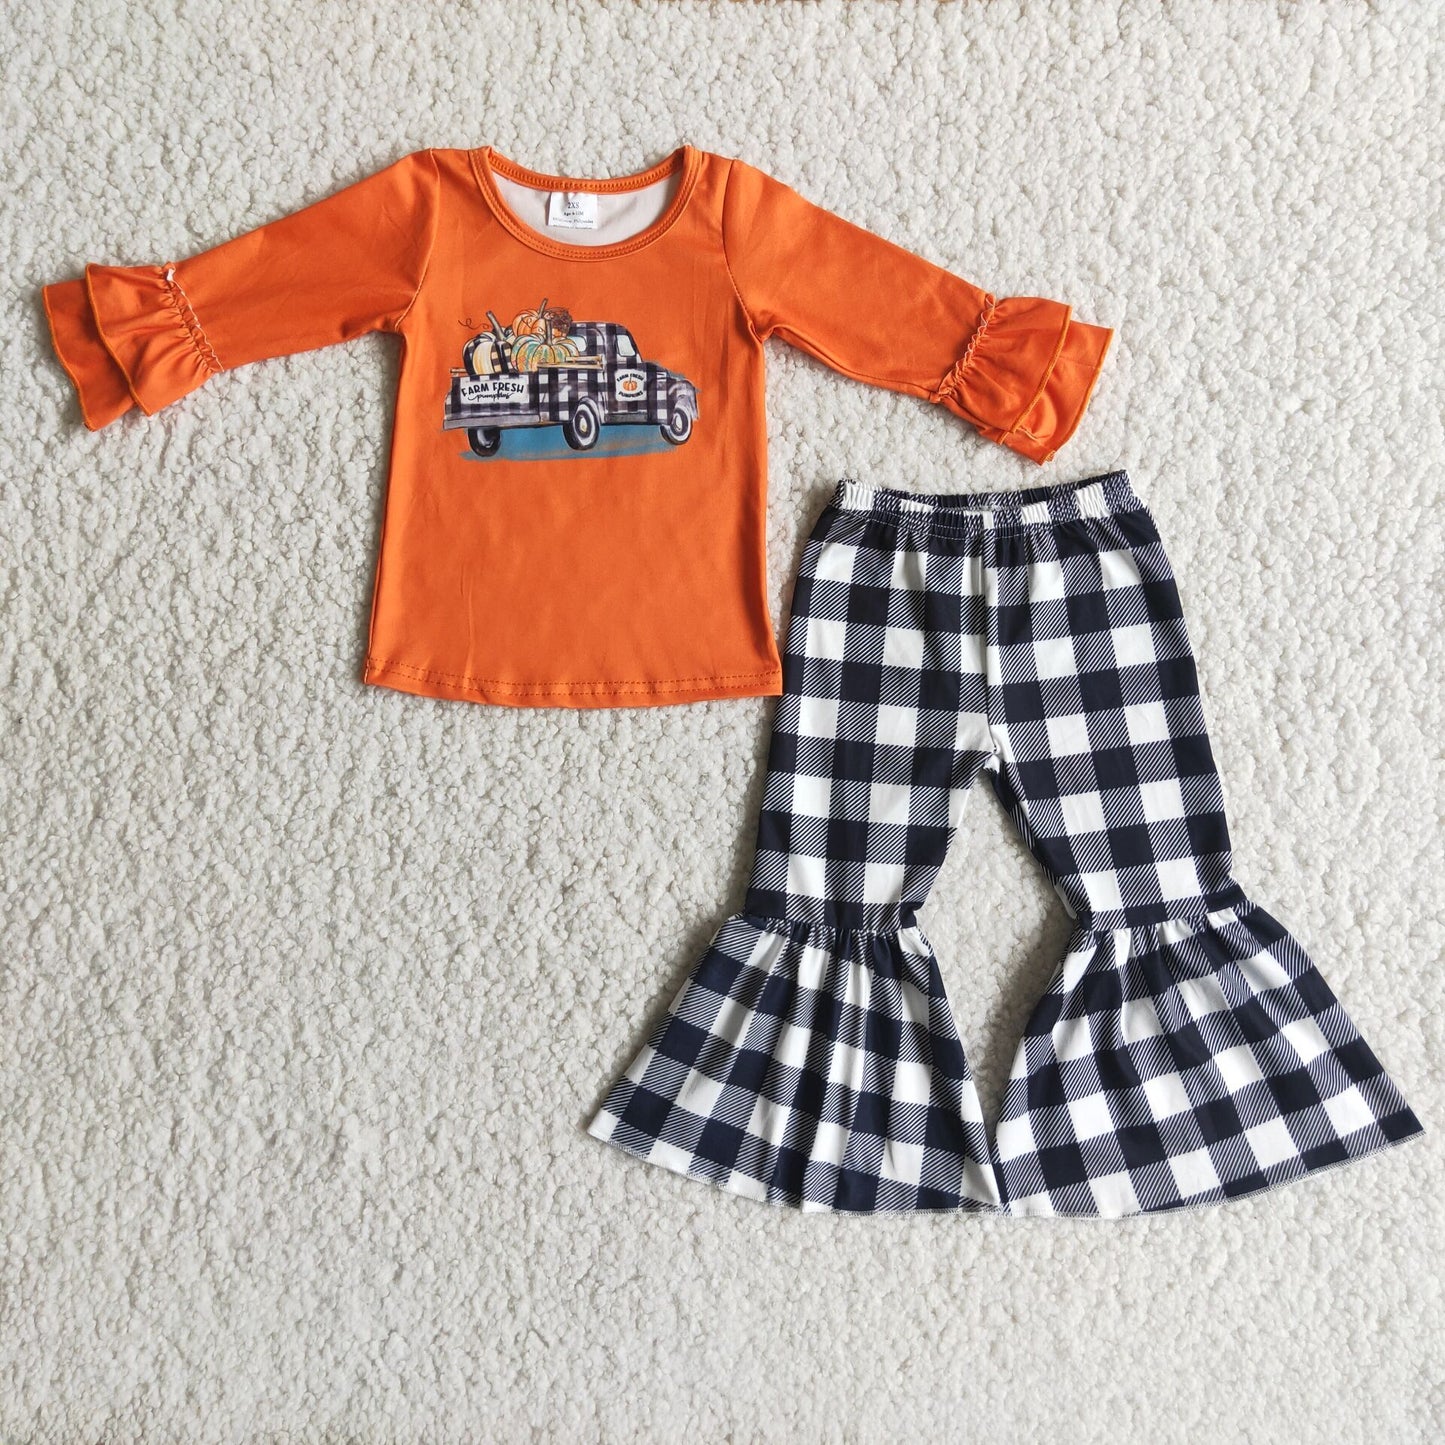 (Promotion) 6 A8-29 Orange Pumpkin Top Black Plaid Bell Pants Girls Fall Clothes Set